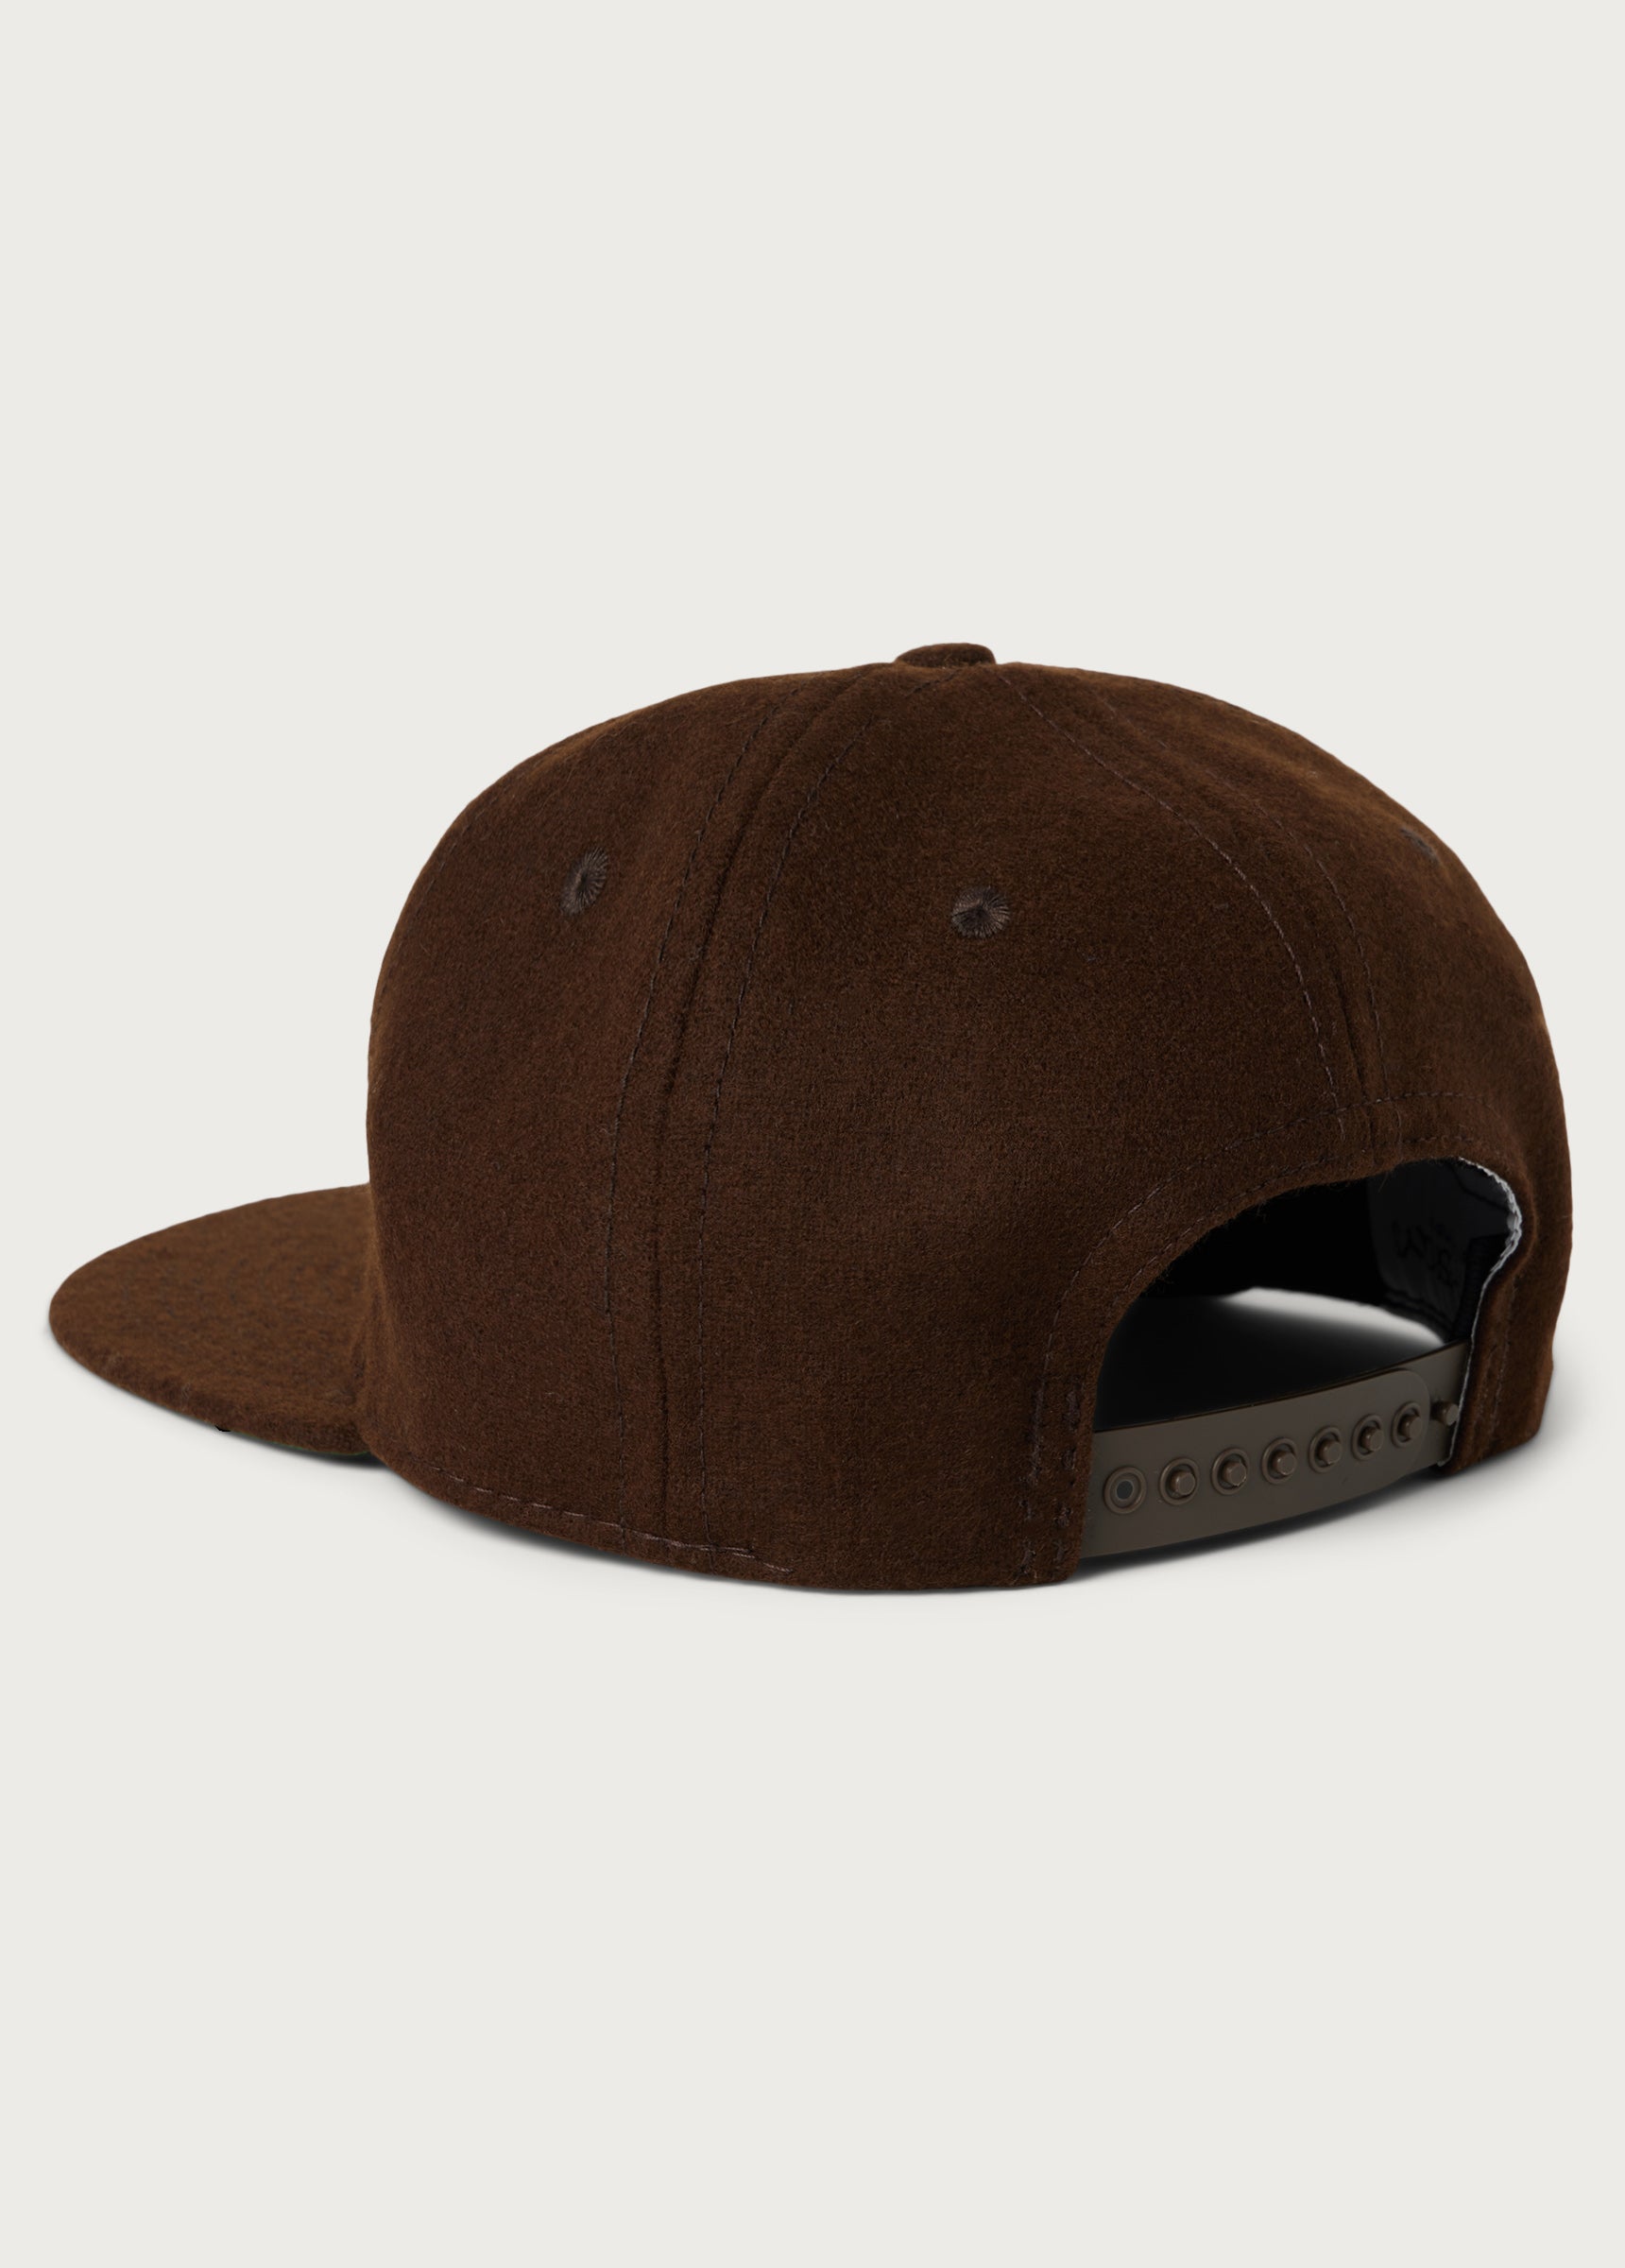 Team Hat in Brown